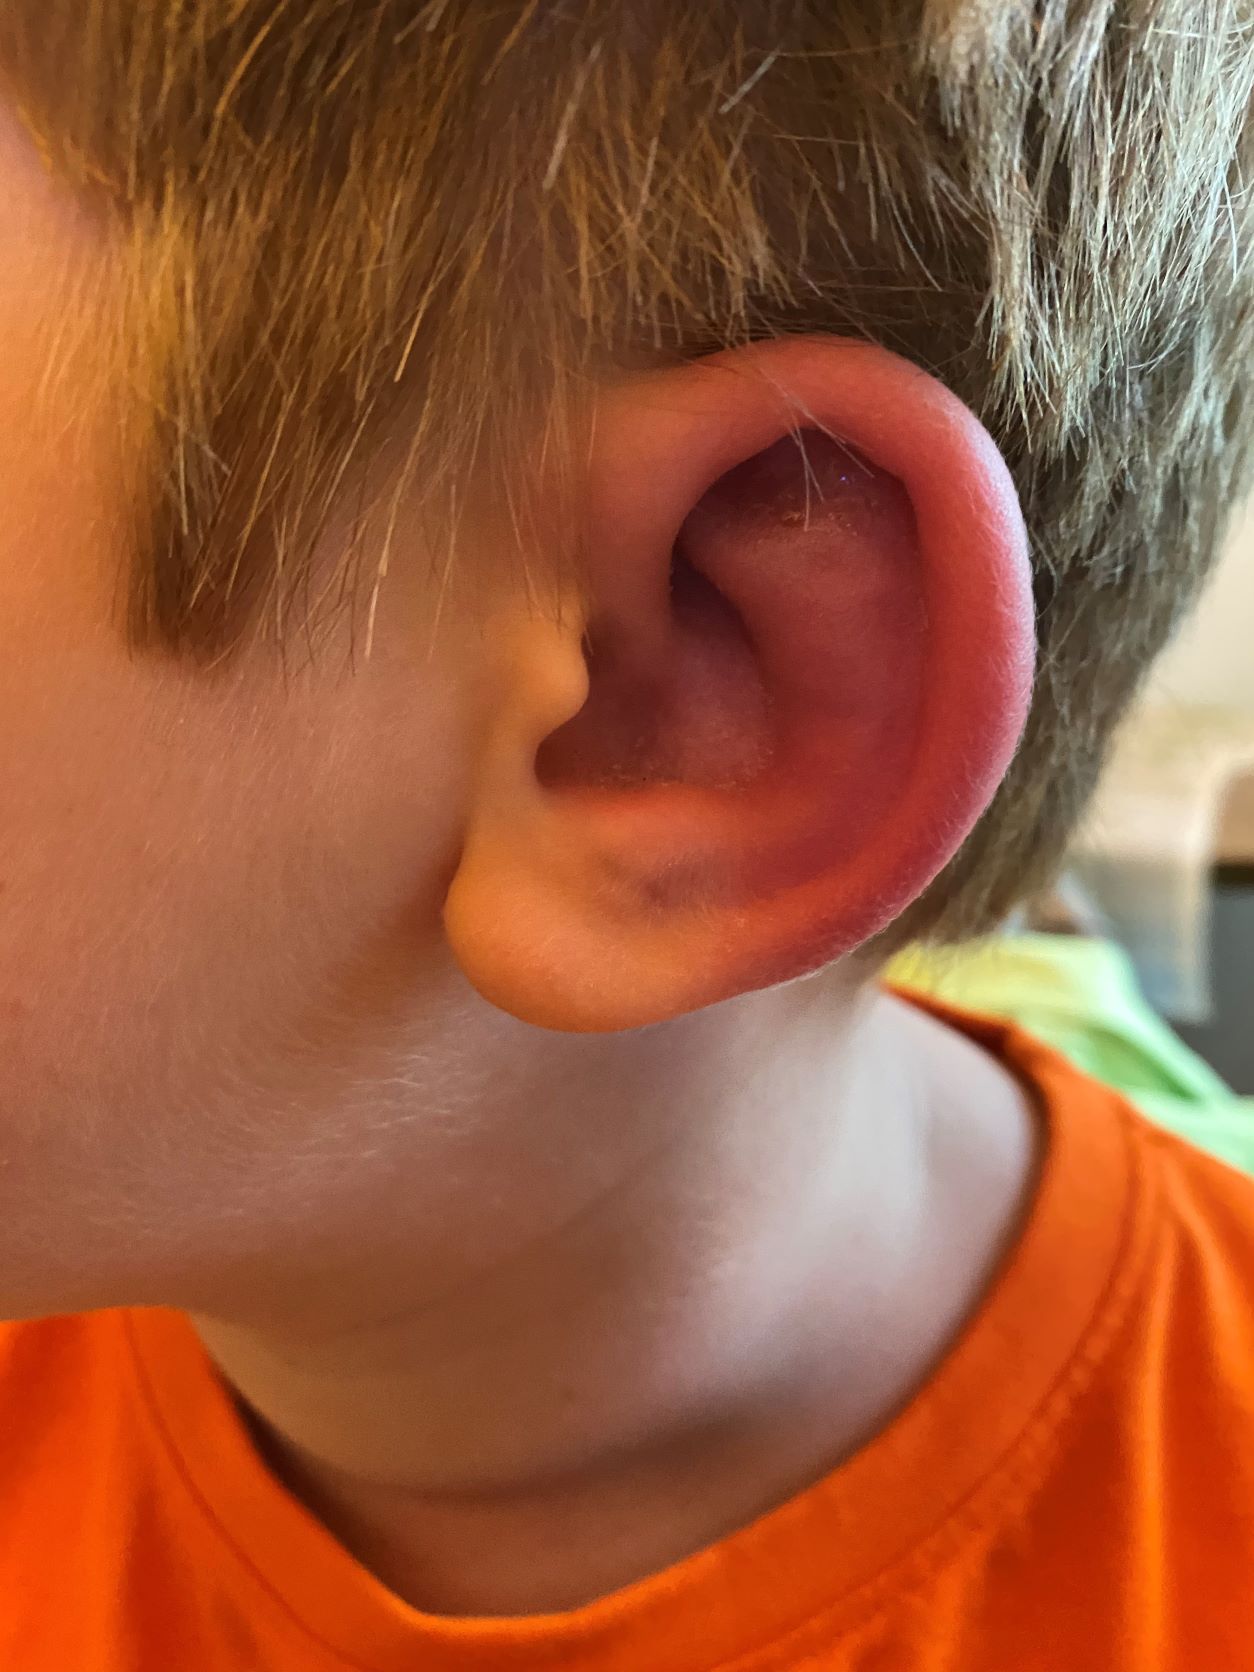 Impetigo in a child's ear